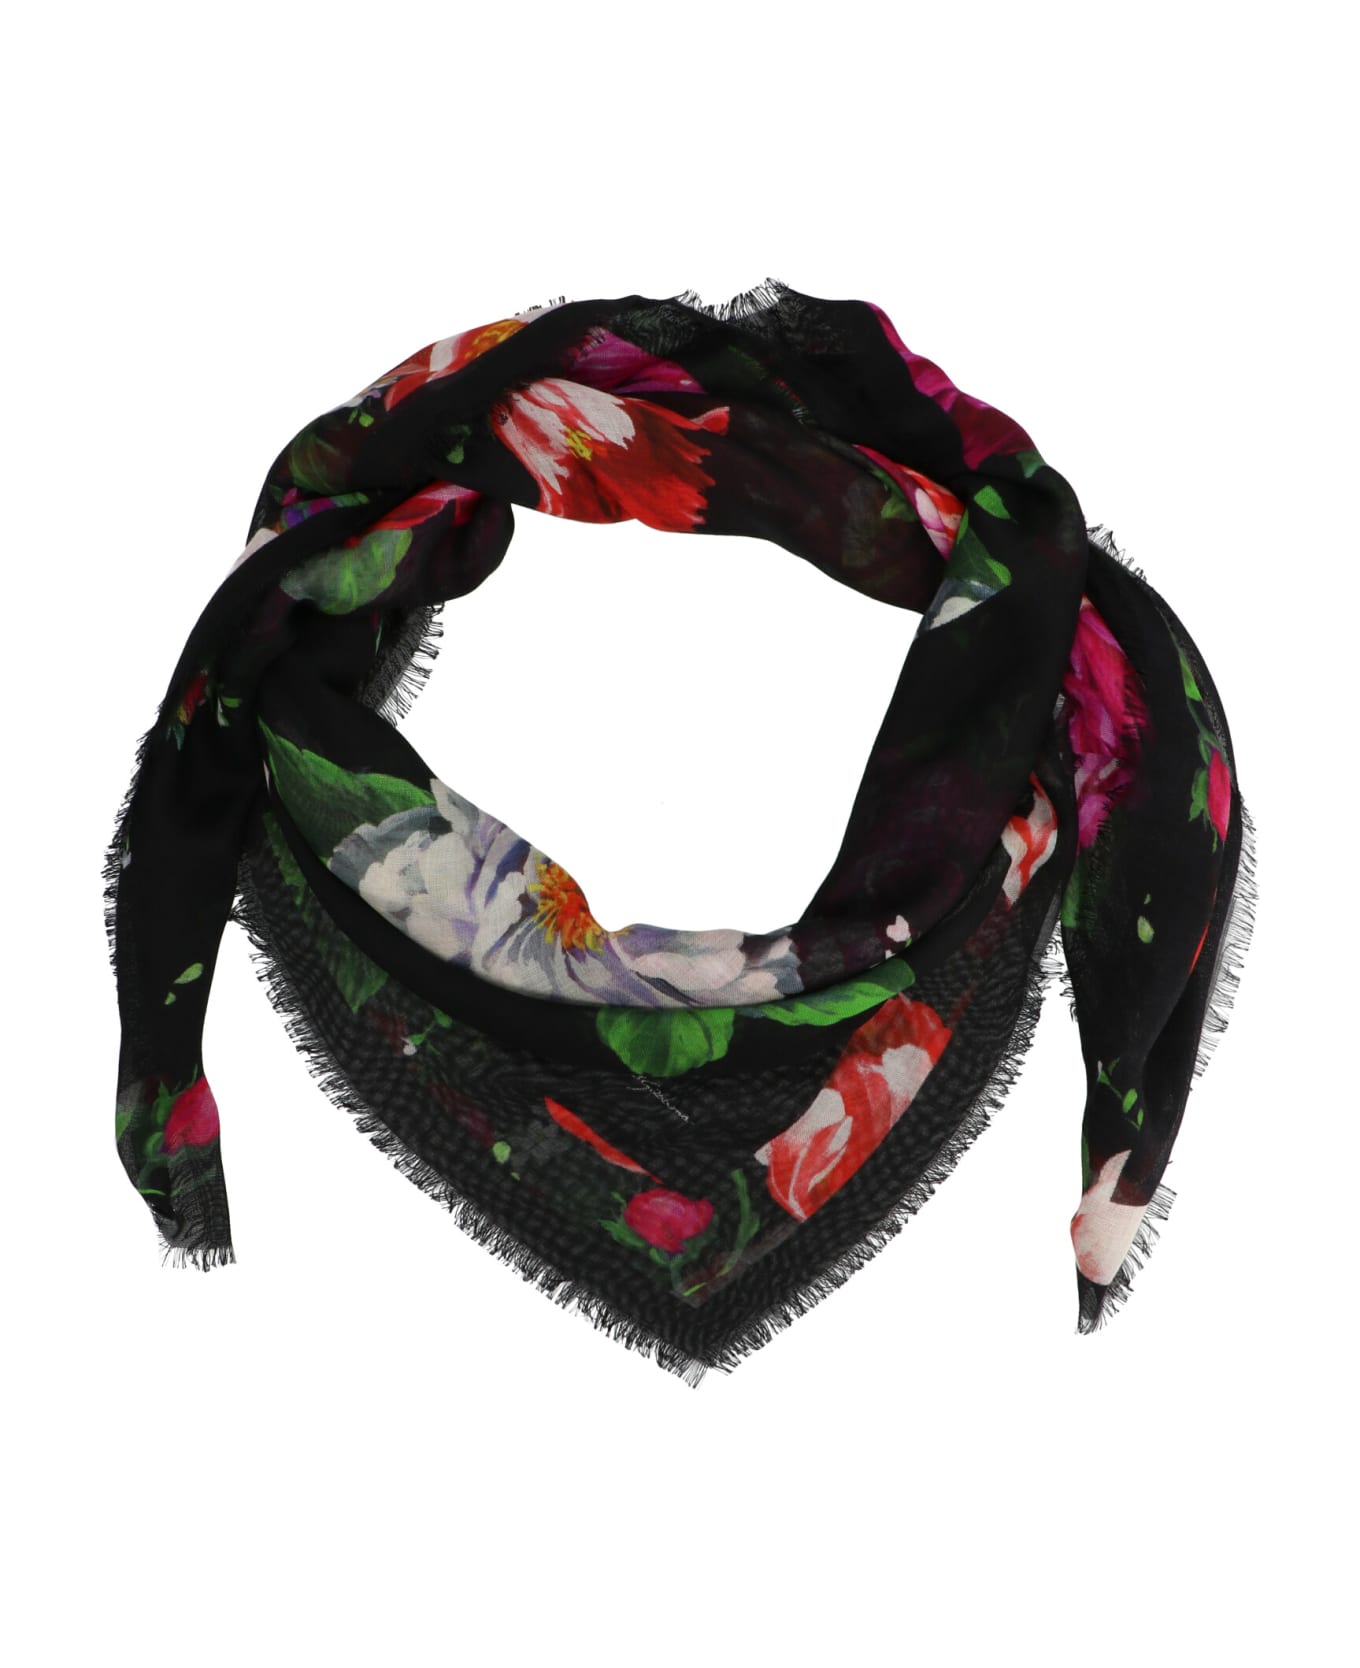 Dolce & Gabbana Floral Print Scarf - Multicolor